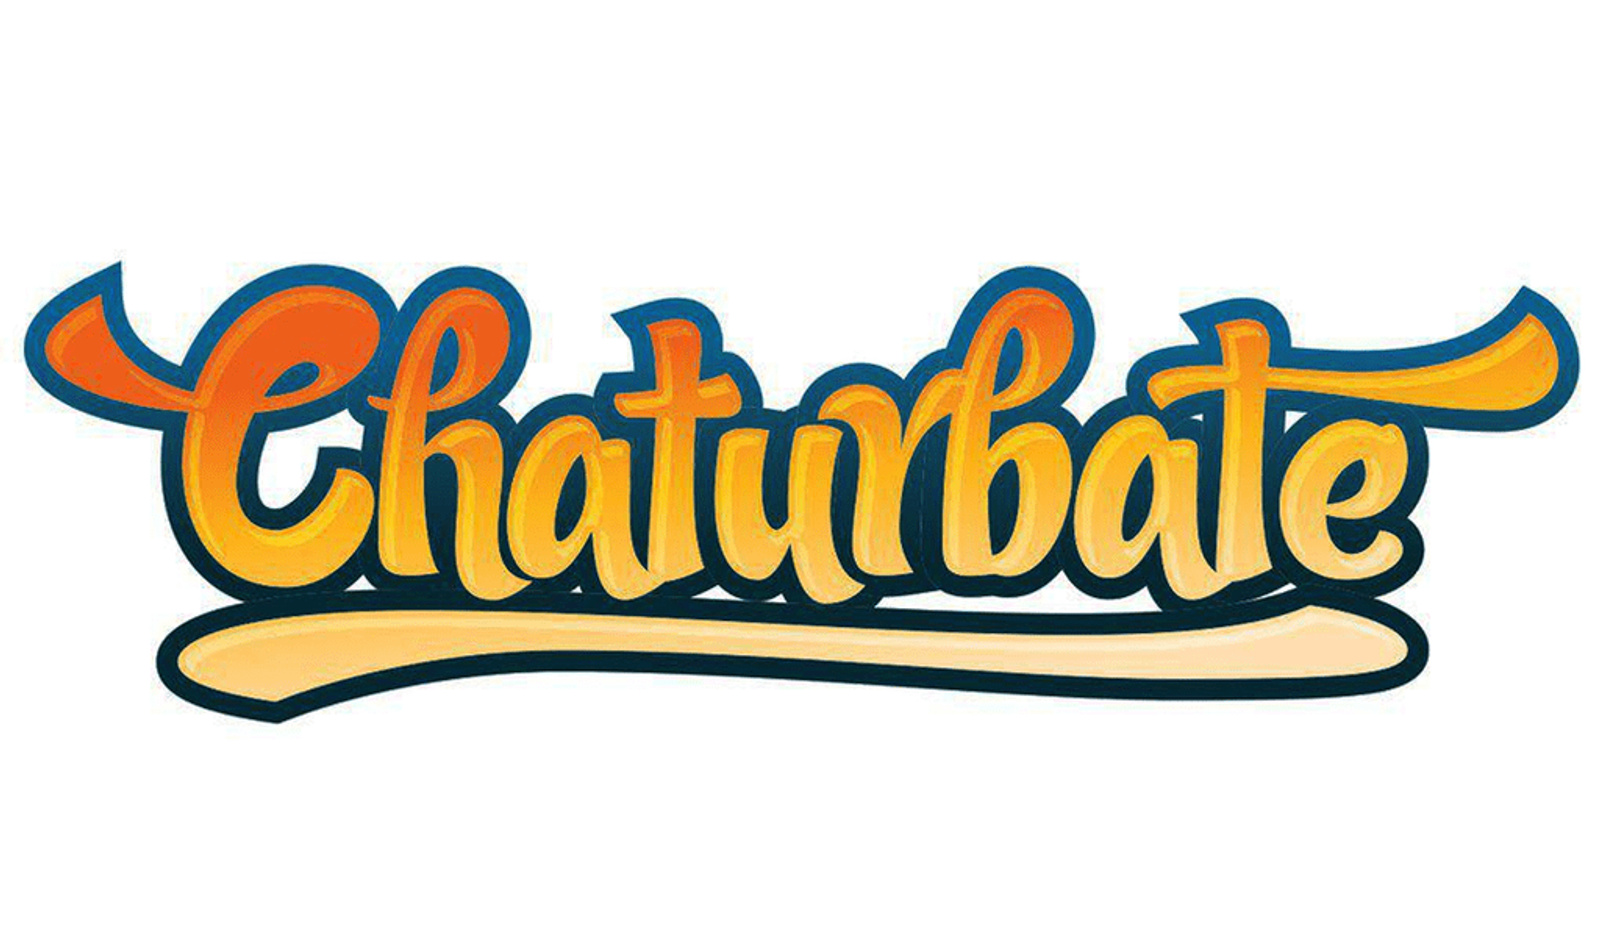 Chaturbate, Broadcasters Celebrate 8 Alt Porn Award Noms